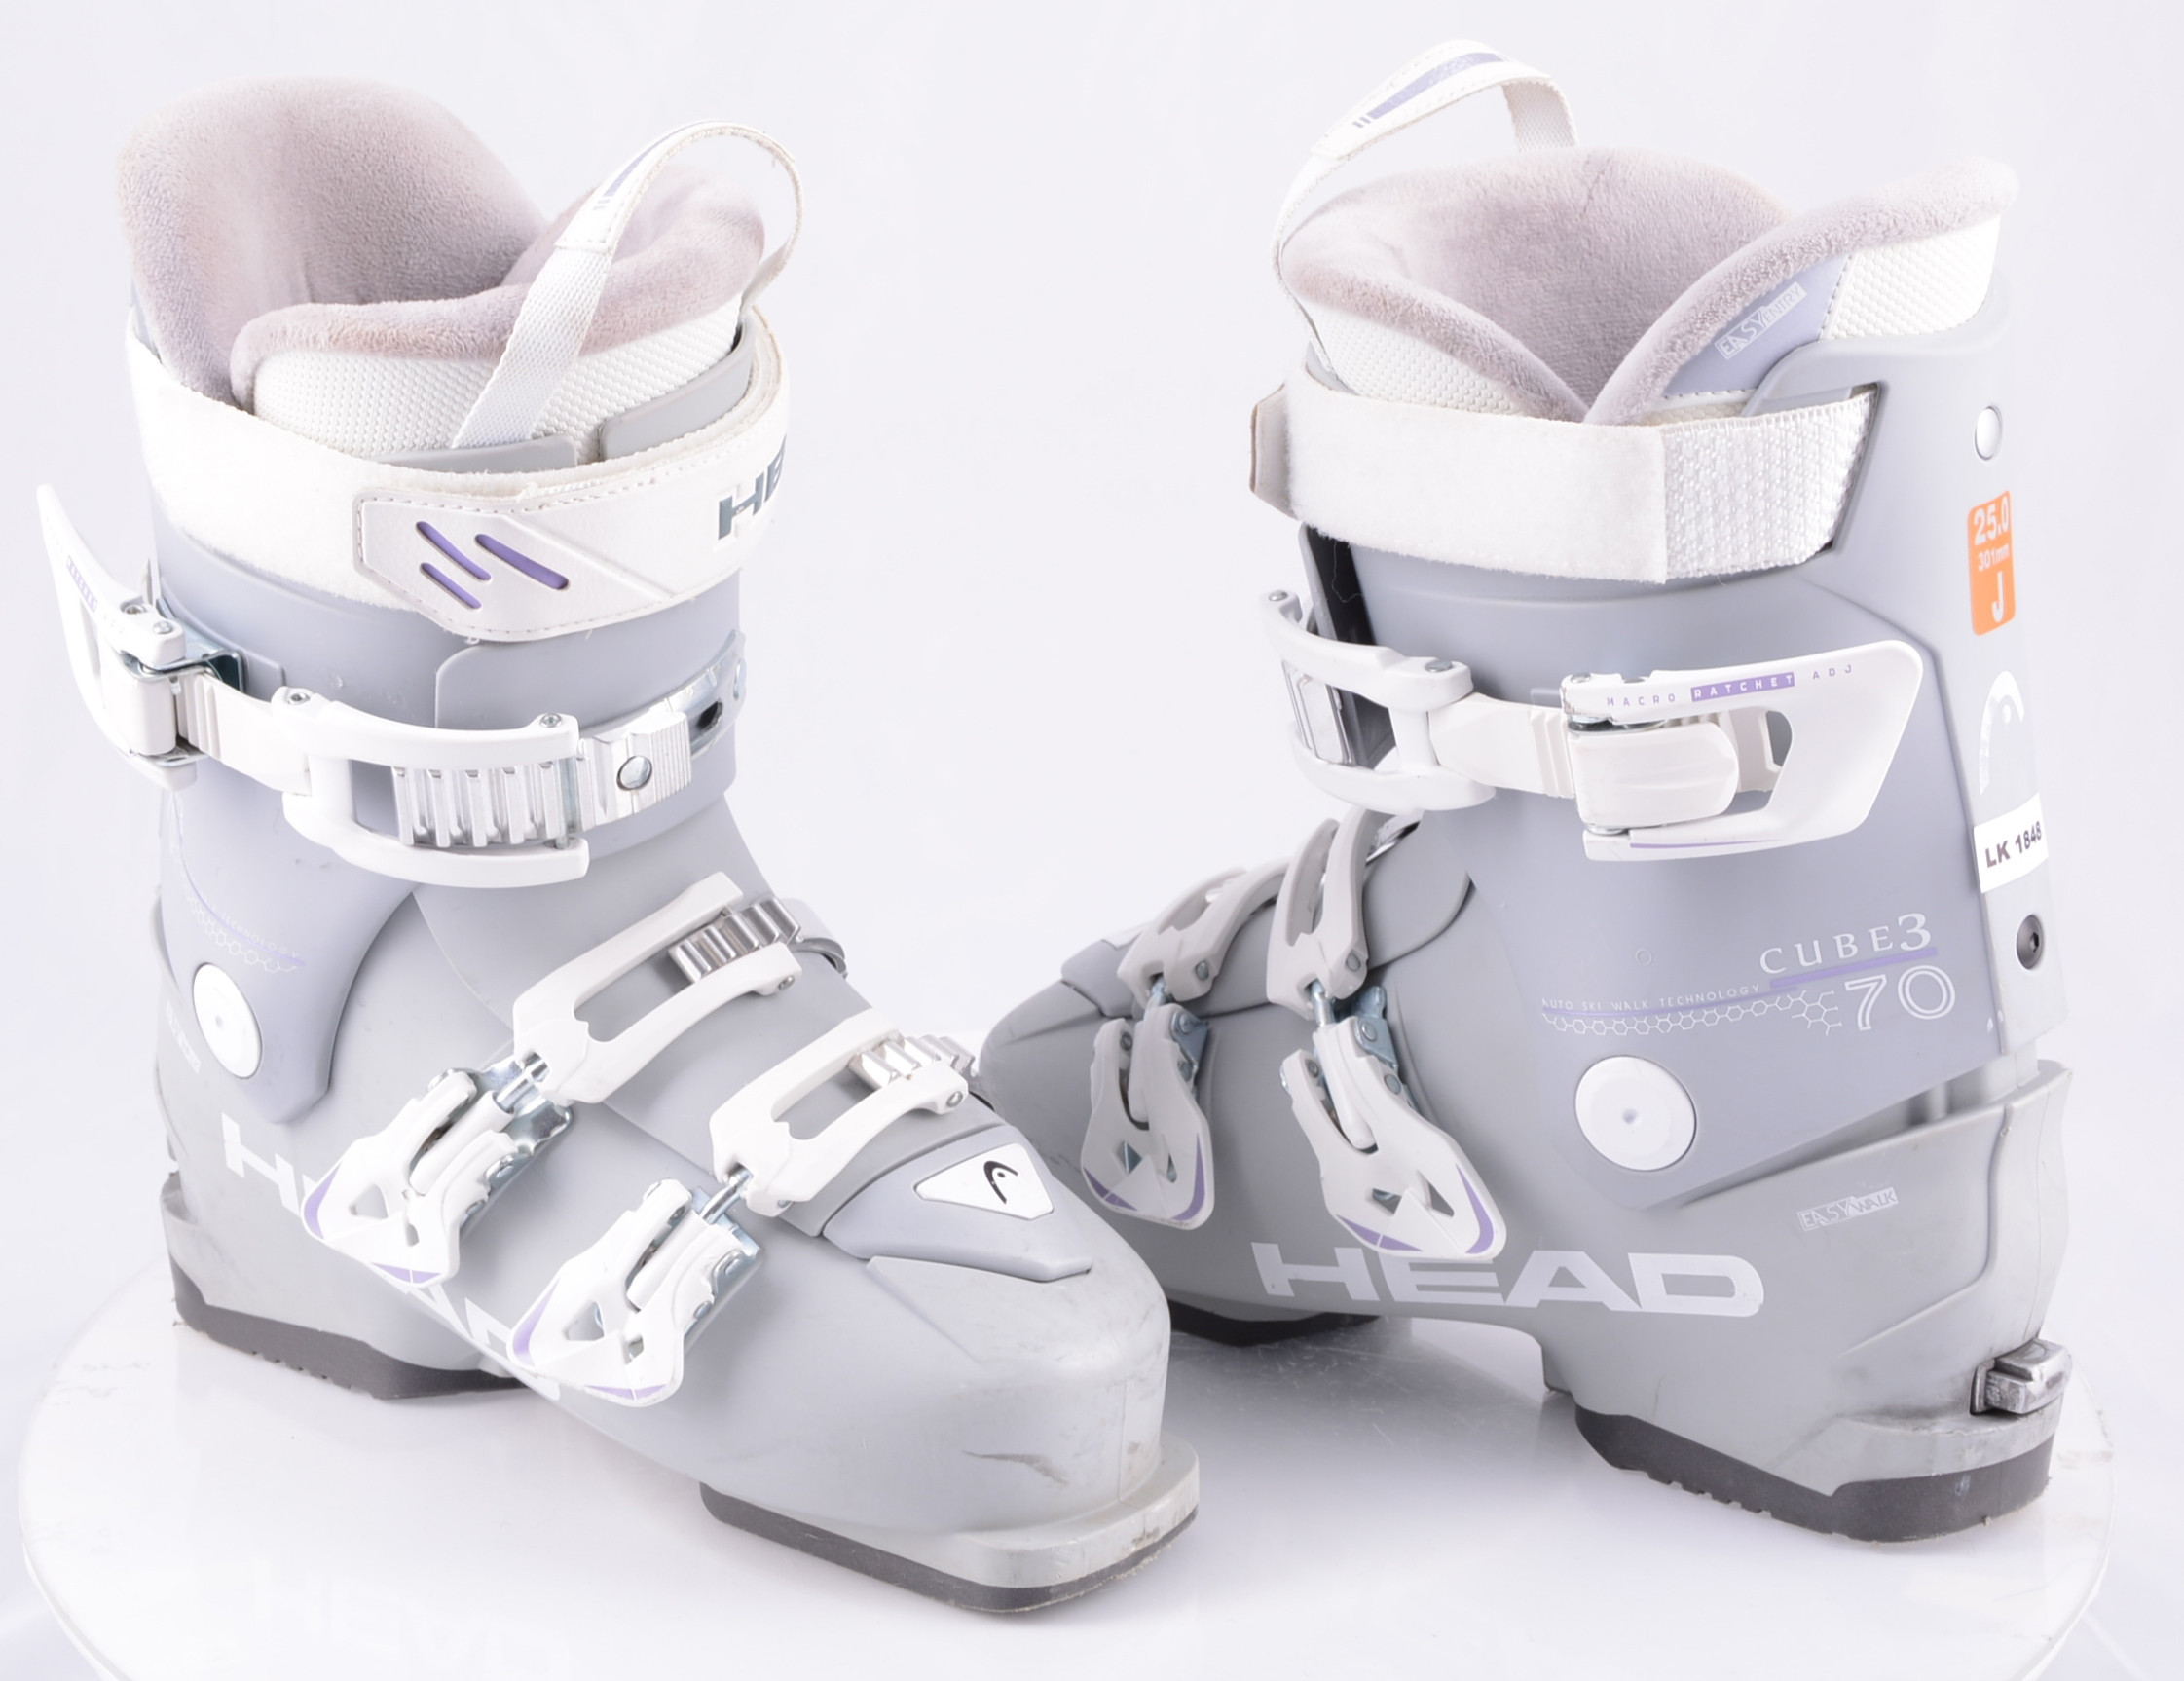 women's boots CUBE 3 70 W, Ratchet buckle, EASY entry, EASY walk, micro ( TOP ) - Mardosport.com